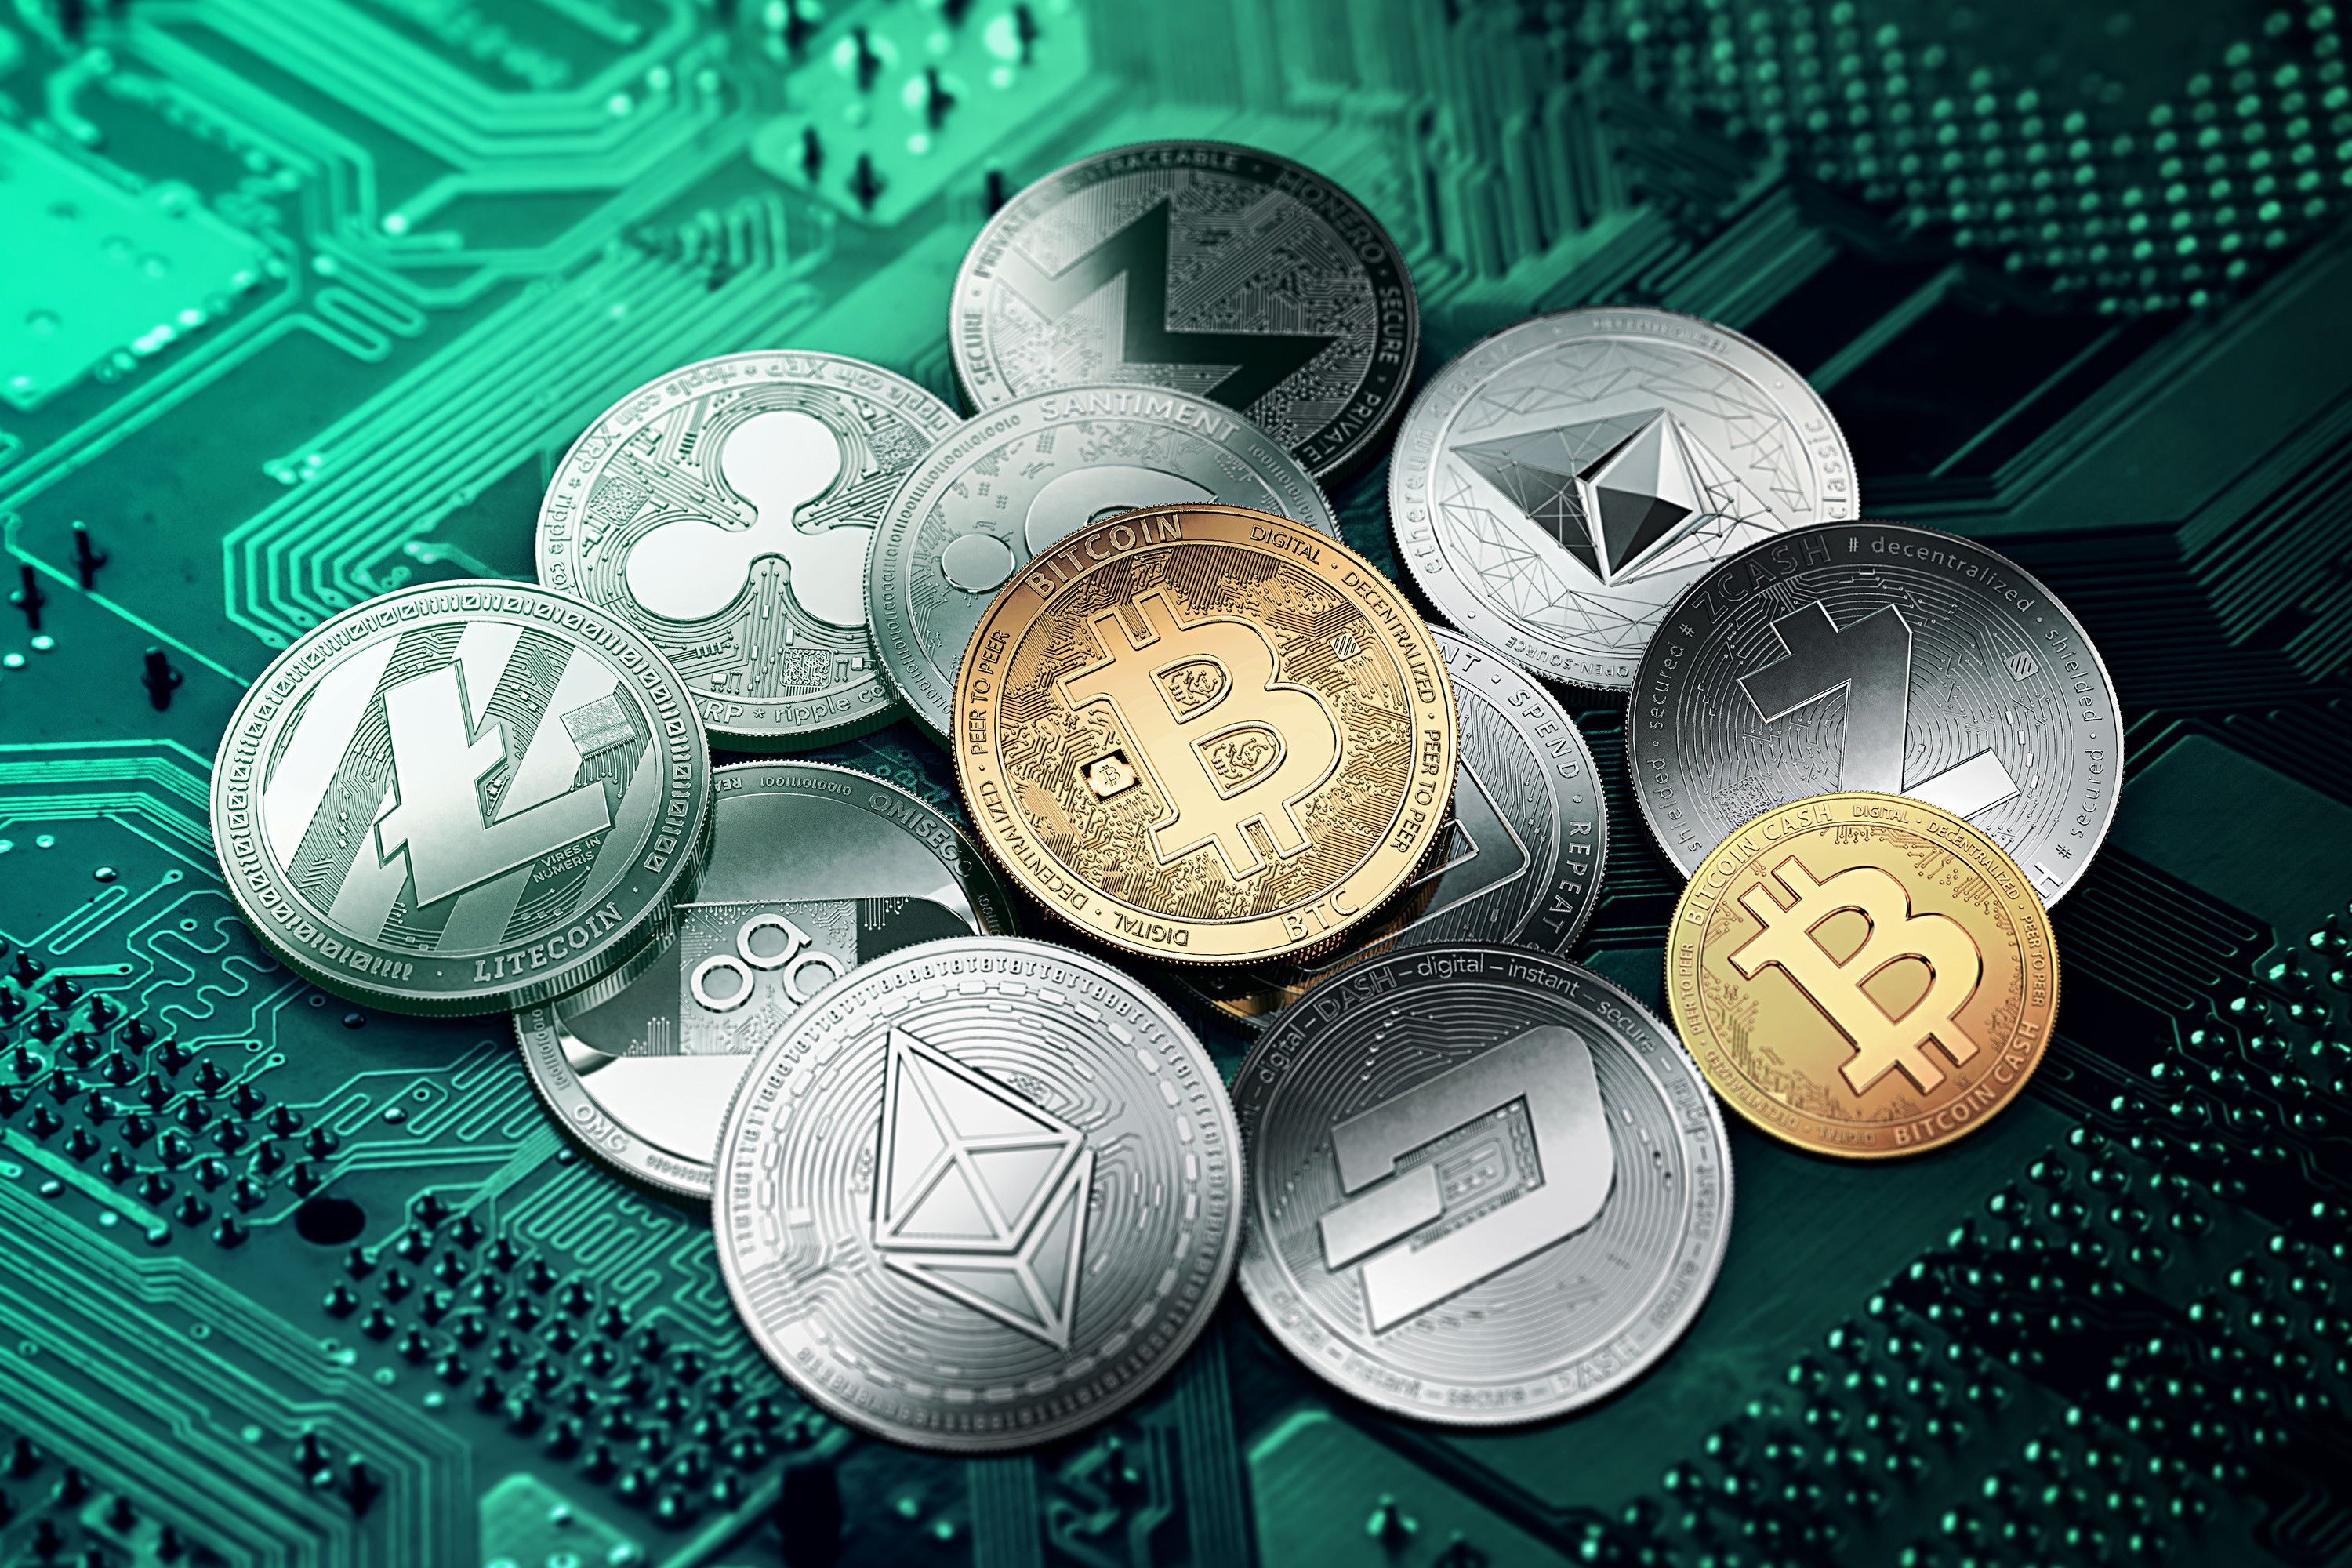 Buy tkn cryptocurrency bitcoins paysafecard